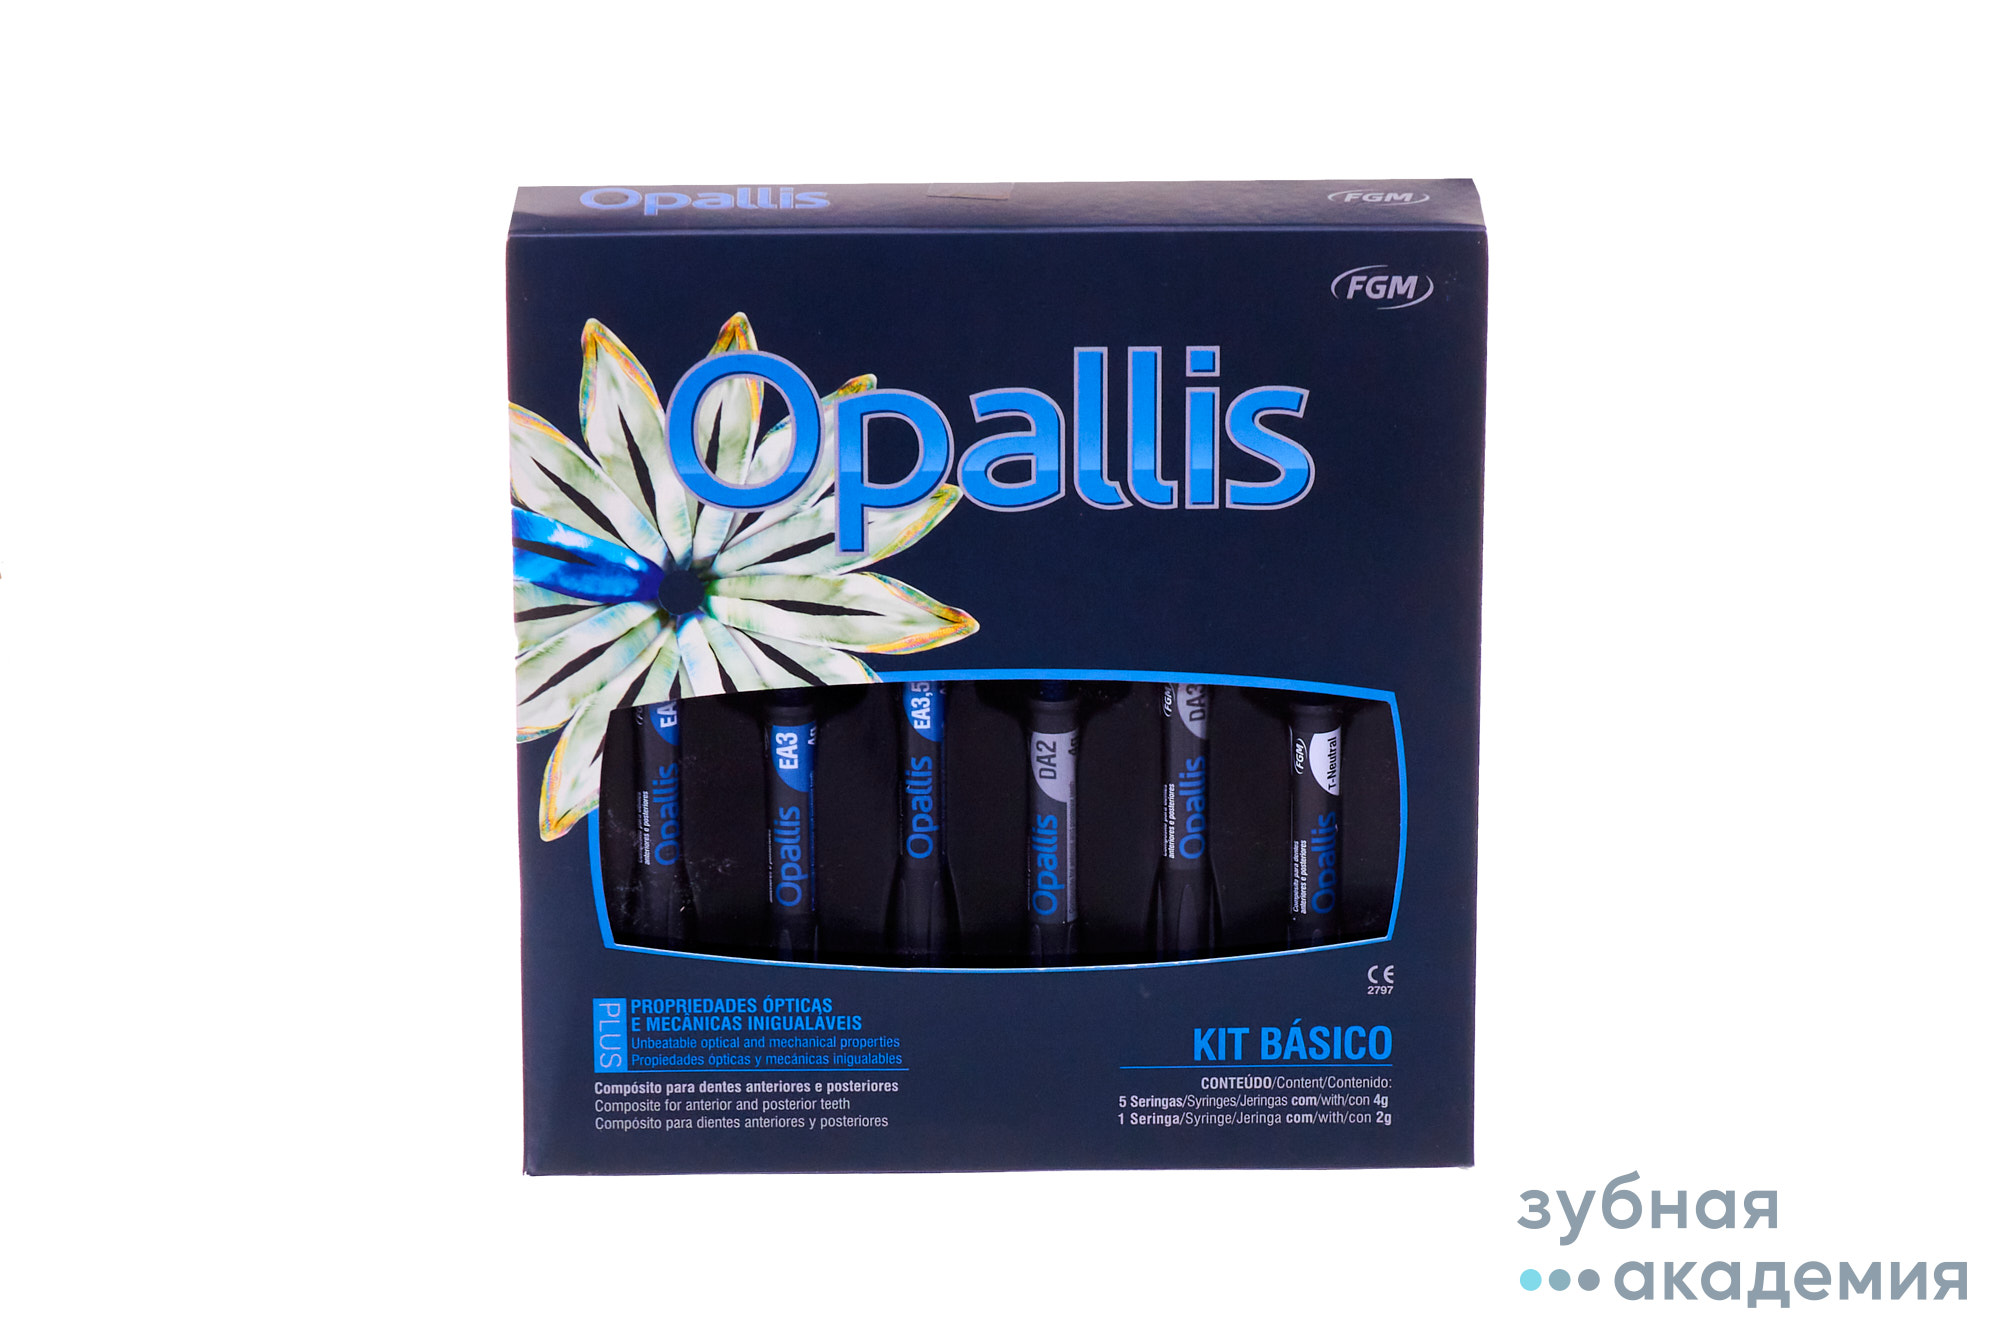 Opallis Basic Kit / Опаллис Бейсик Кит набор (5*4 г + 1*2 г) FGM/ Бразилия